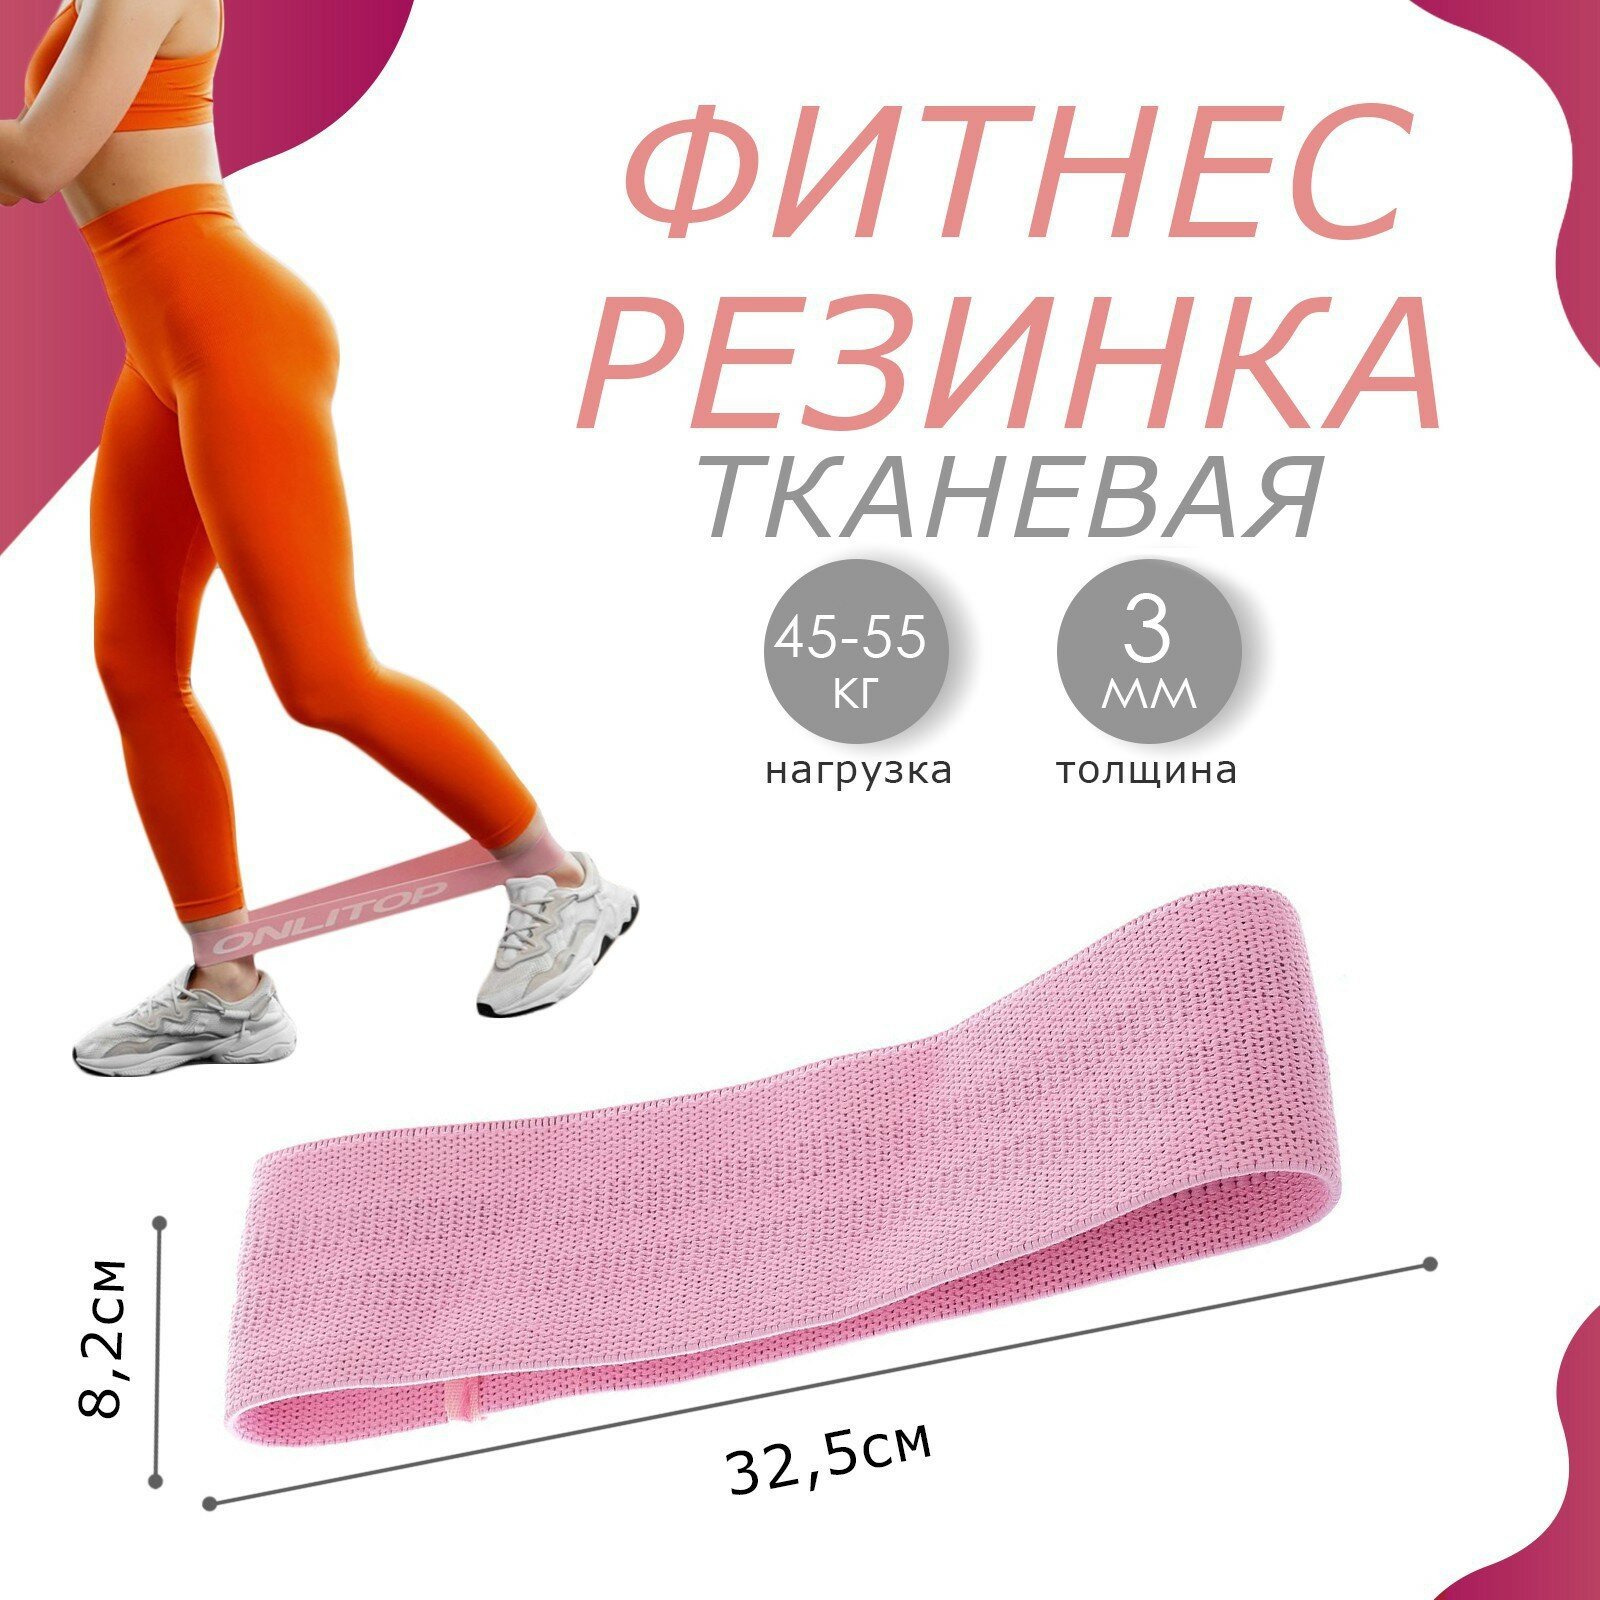 Фитнес-резинка HEAVY, 32,5 х 8,2 х 0,3 см, нагрузка 45-55 кг, цвет розовый